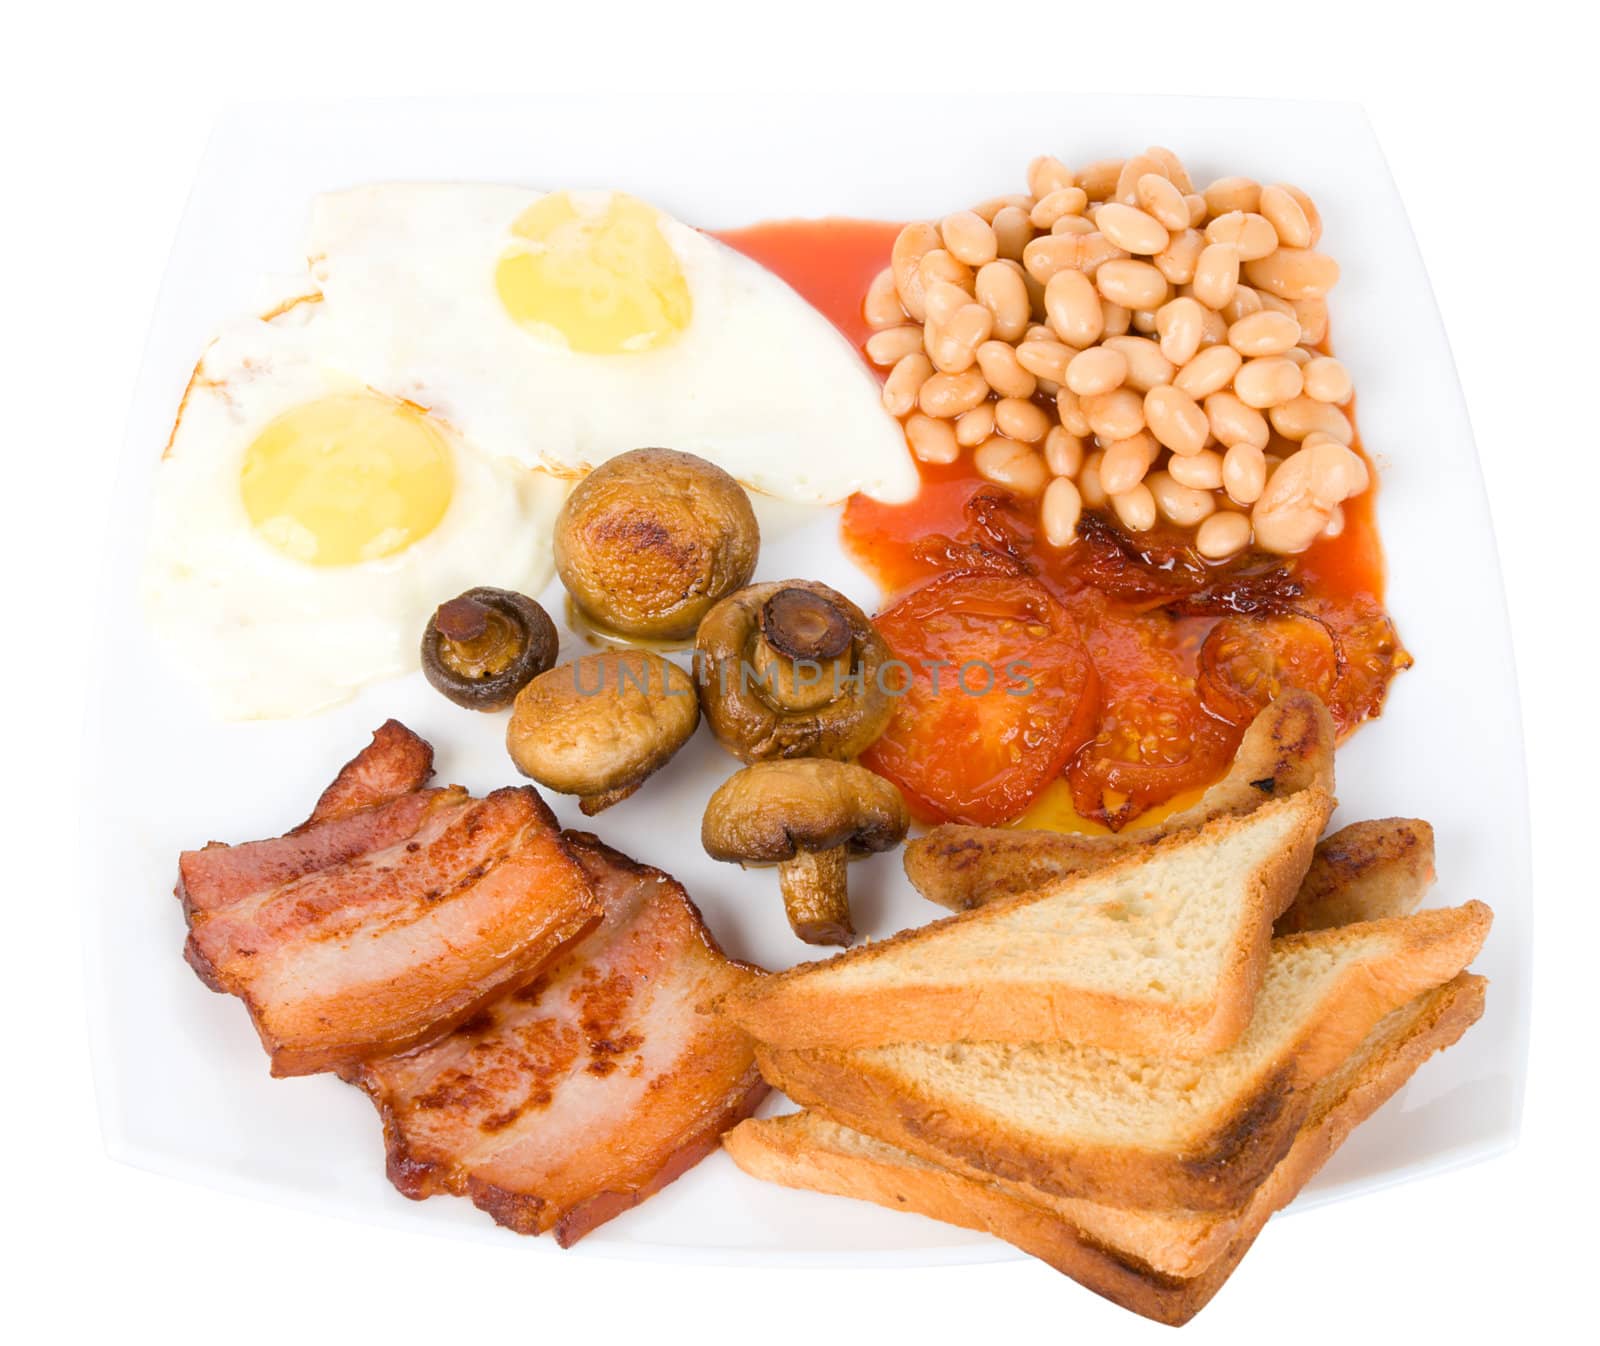 traditional english breakfast by Alekcey